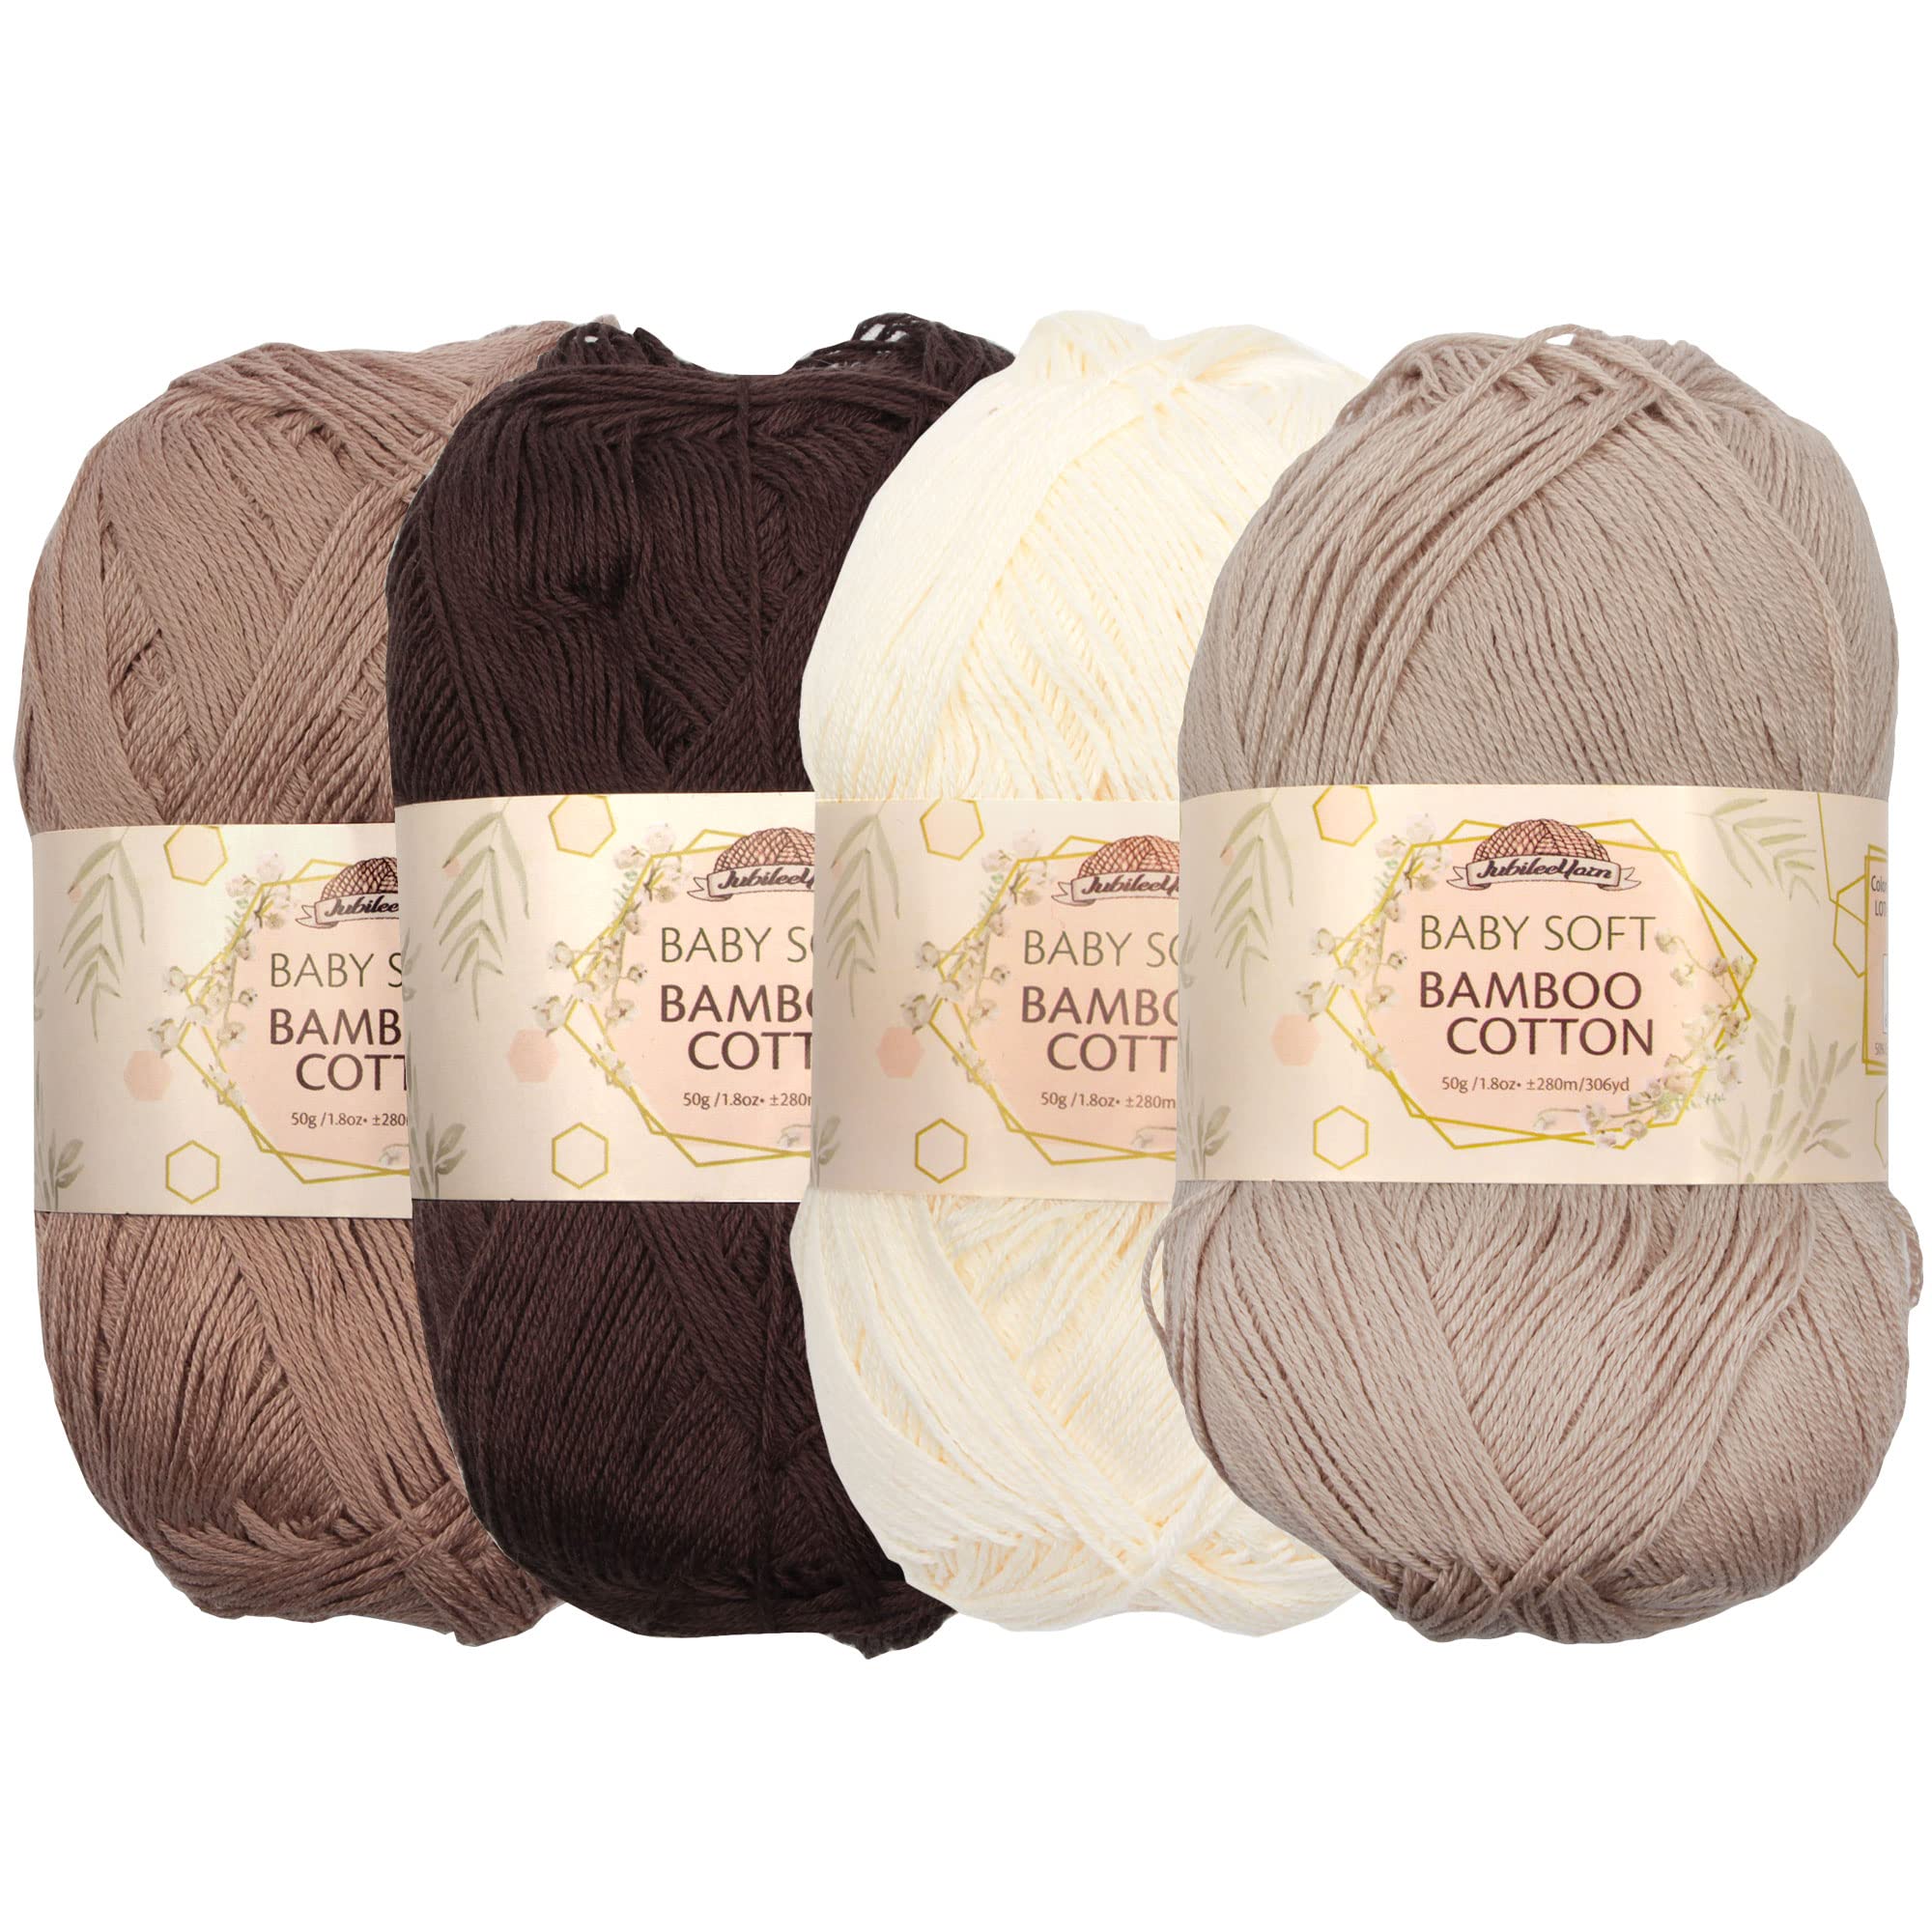 JubileeYarn Baby Soft Bamboo Cotton Yarn - 50g/Skein - Shades of